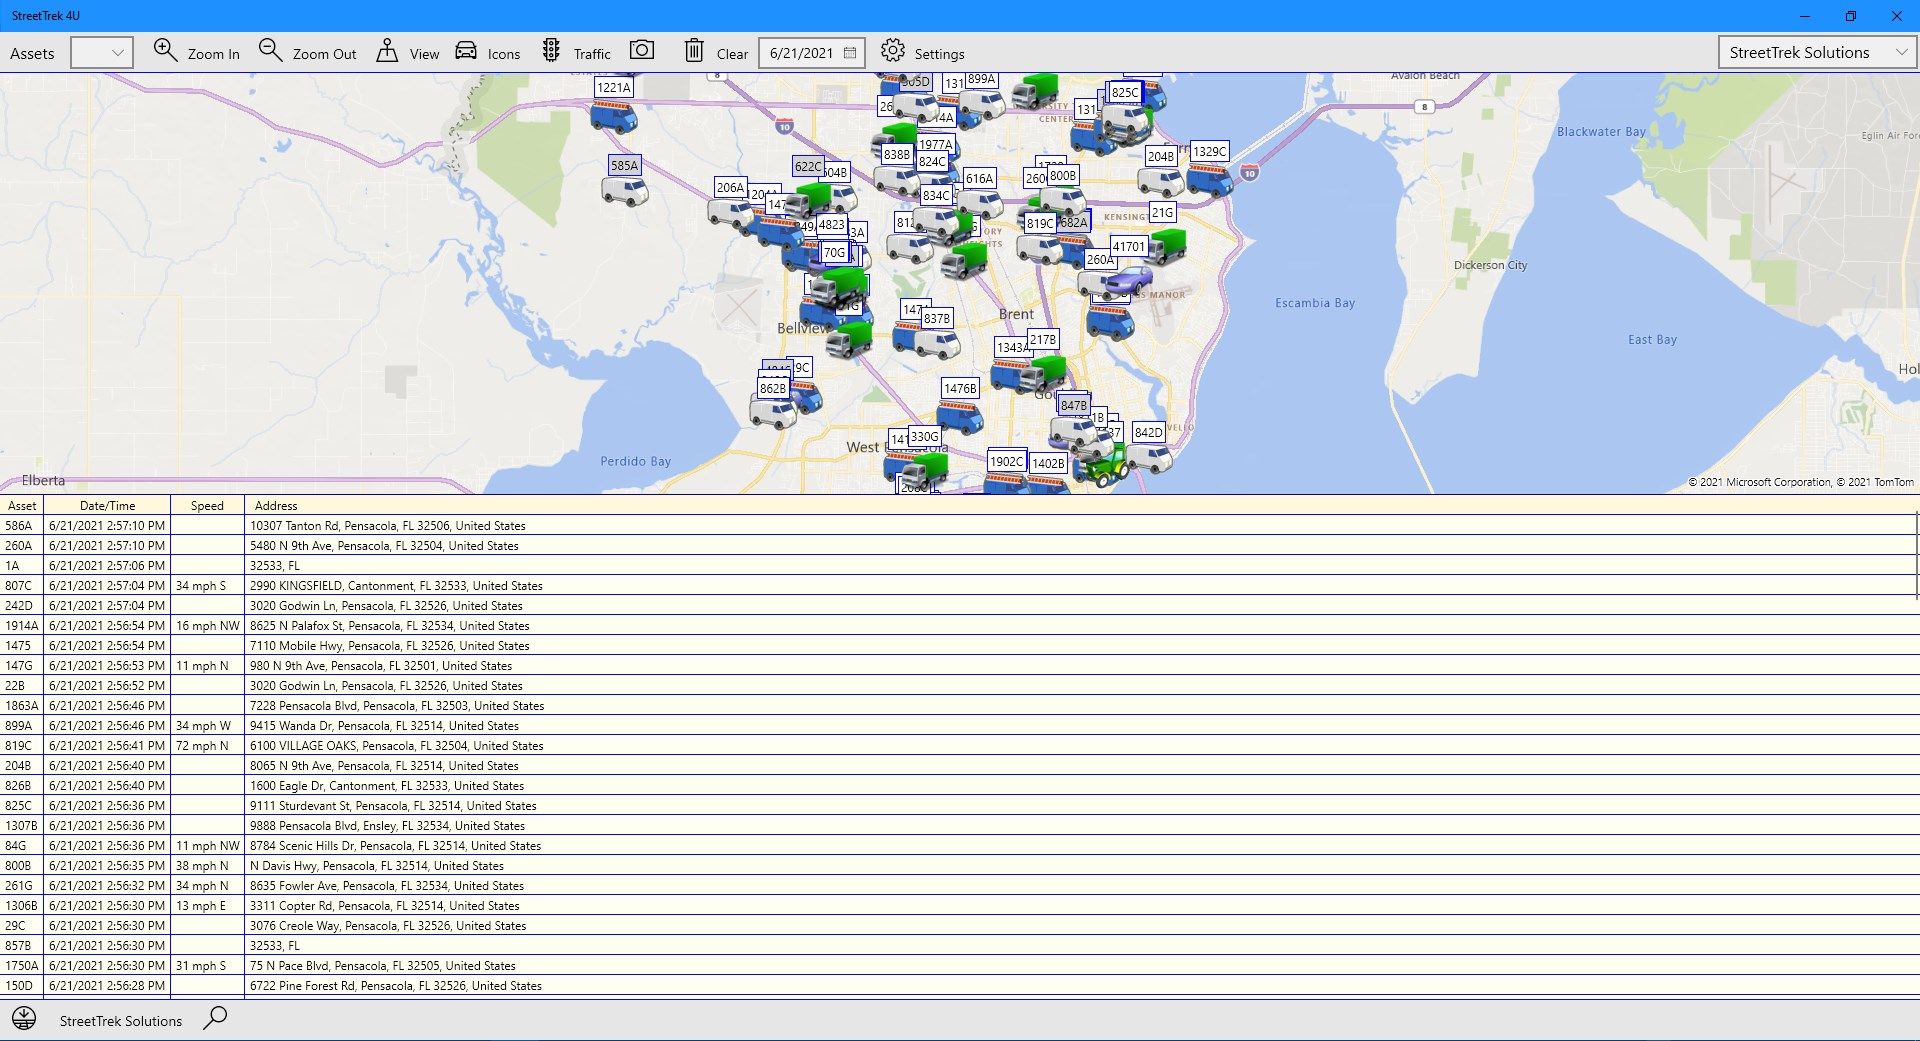 StreetTrek 4U Main Screen with tabular data shown in a grid